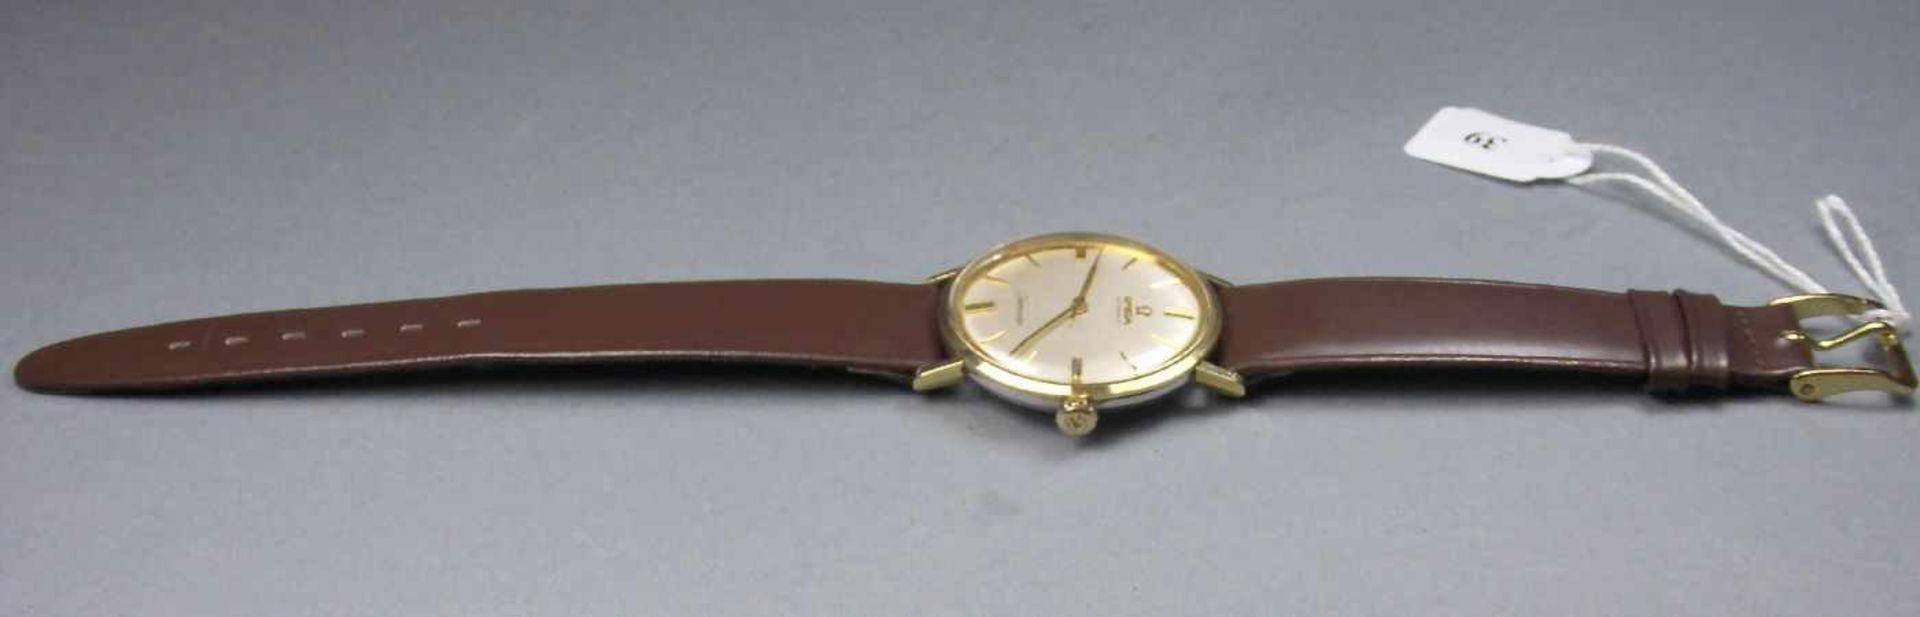 VINTAGE ARMBANDUHR OMEGA SEAMASTER / wristwatch, Manufaktur Omega Watch Co. S.A. / Schweiz, - Bild 5 aus 7